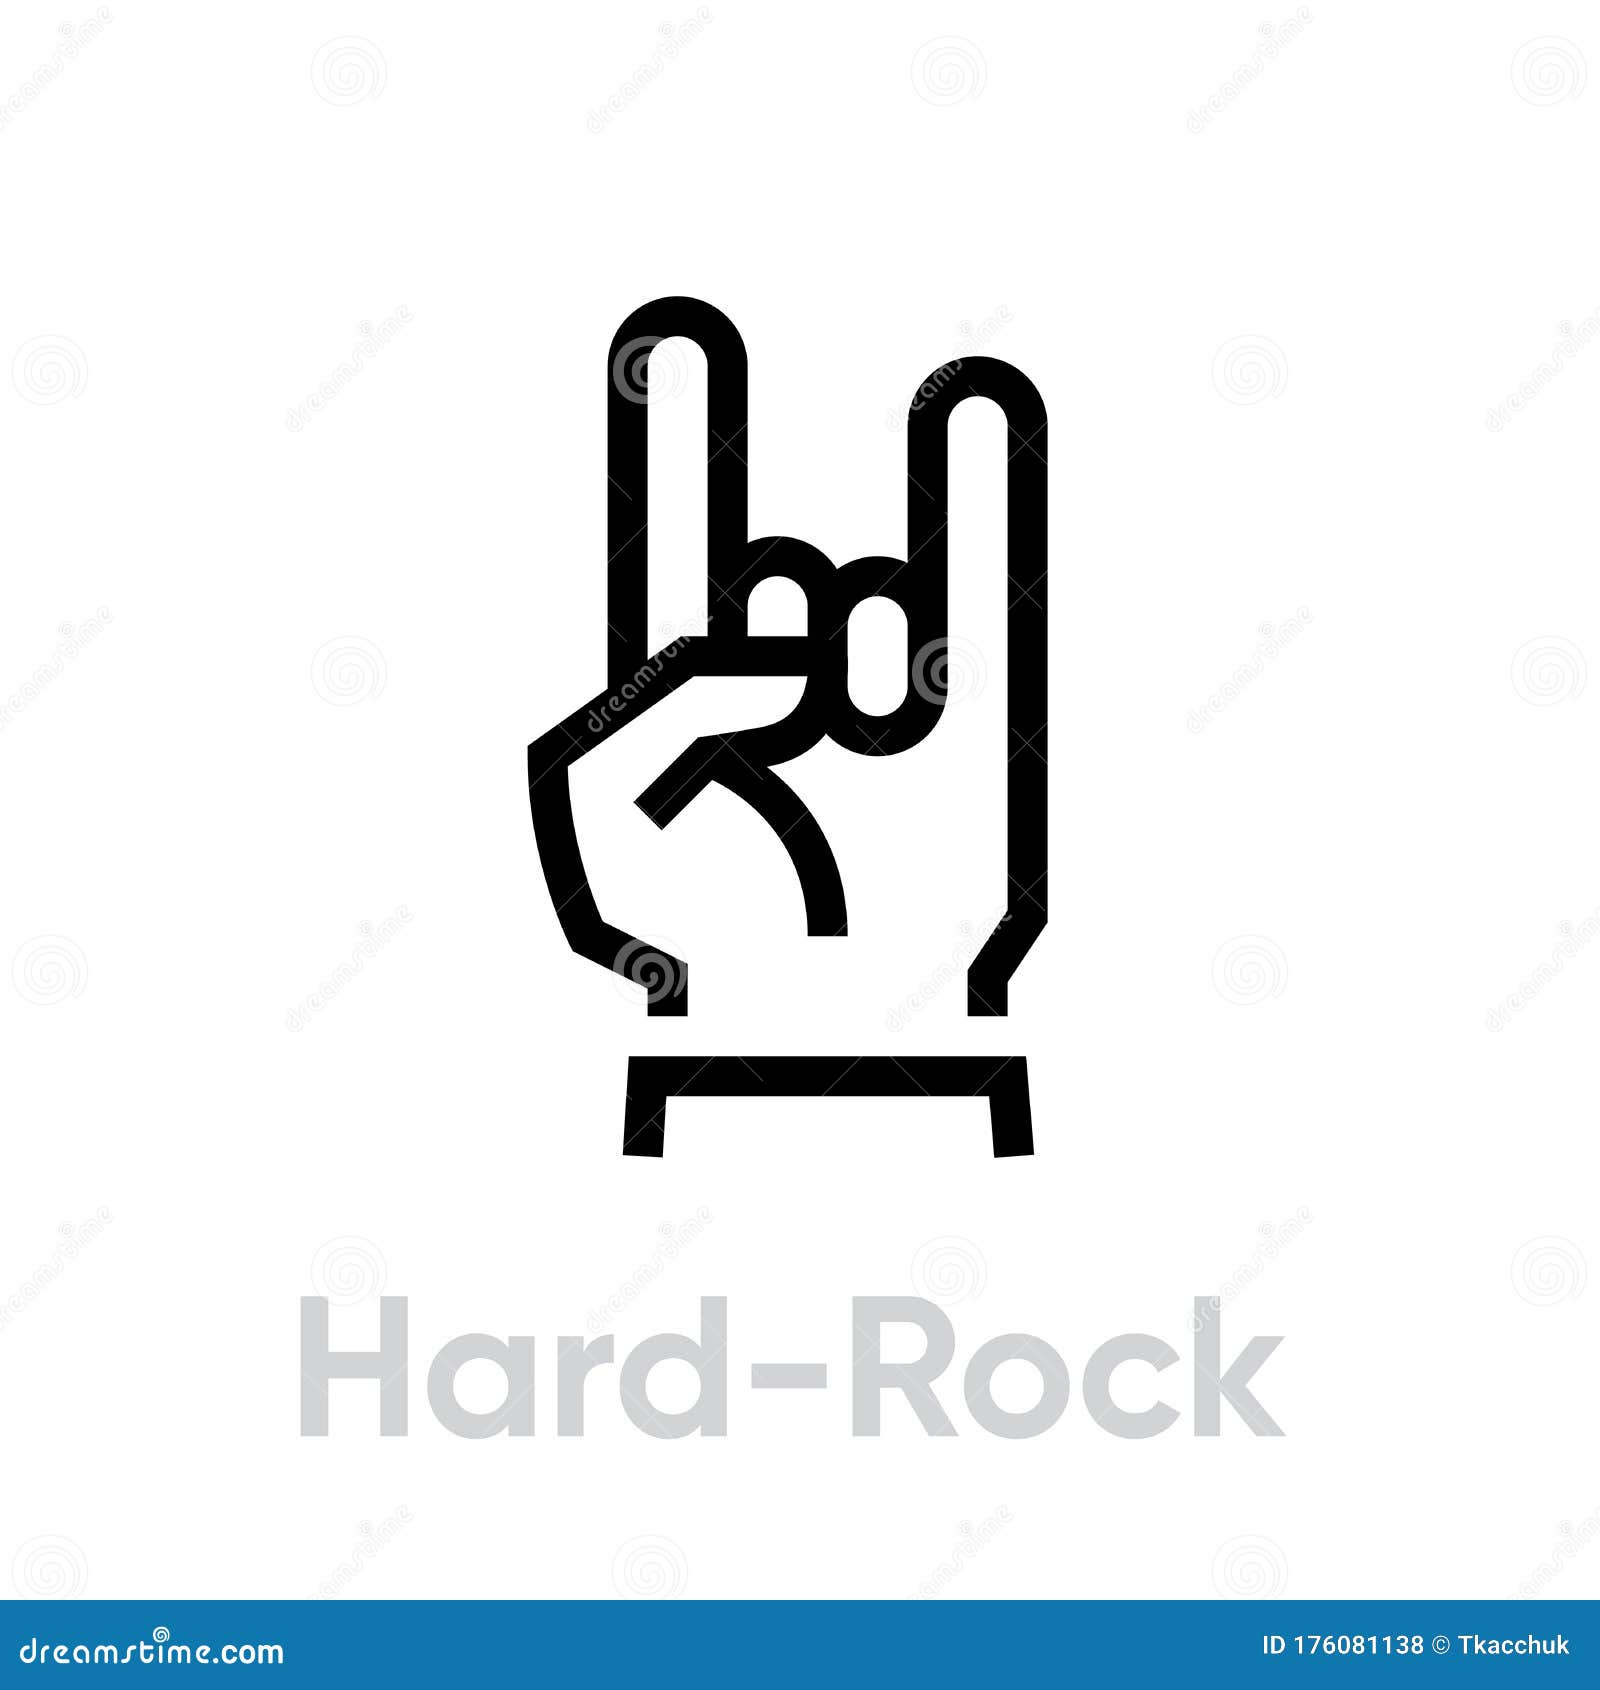  Hard  Rock  Hand Gesture Icon  Editable Line Vector Stock 